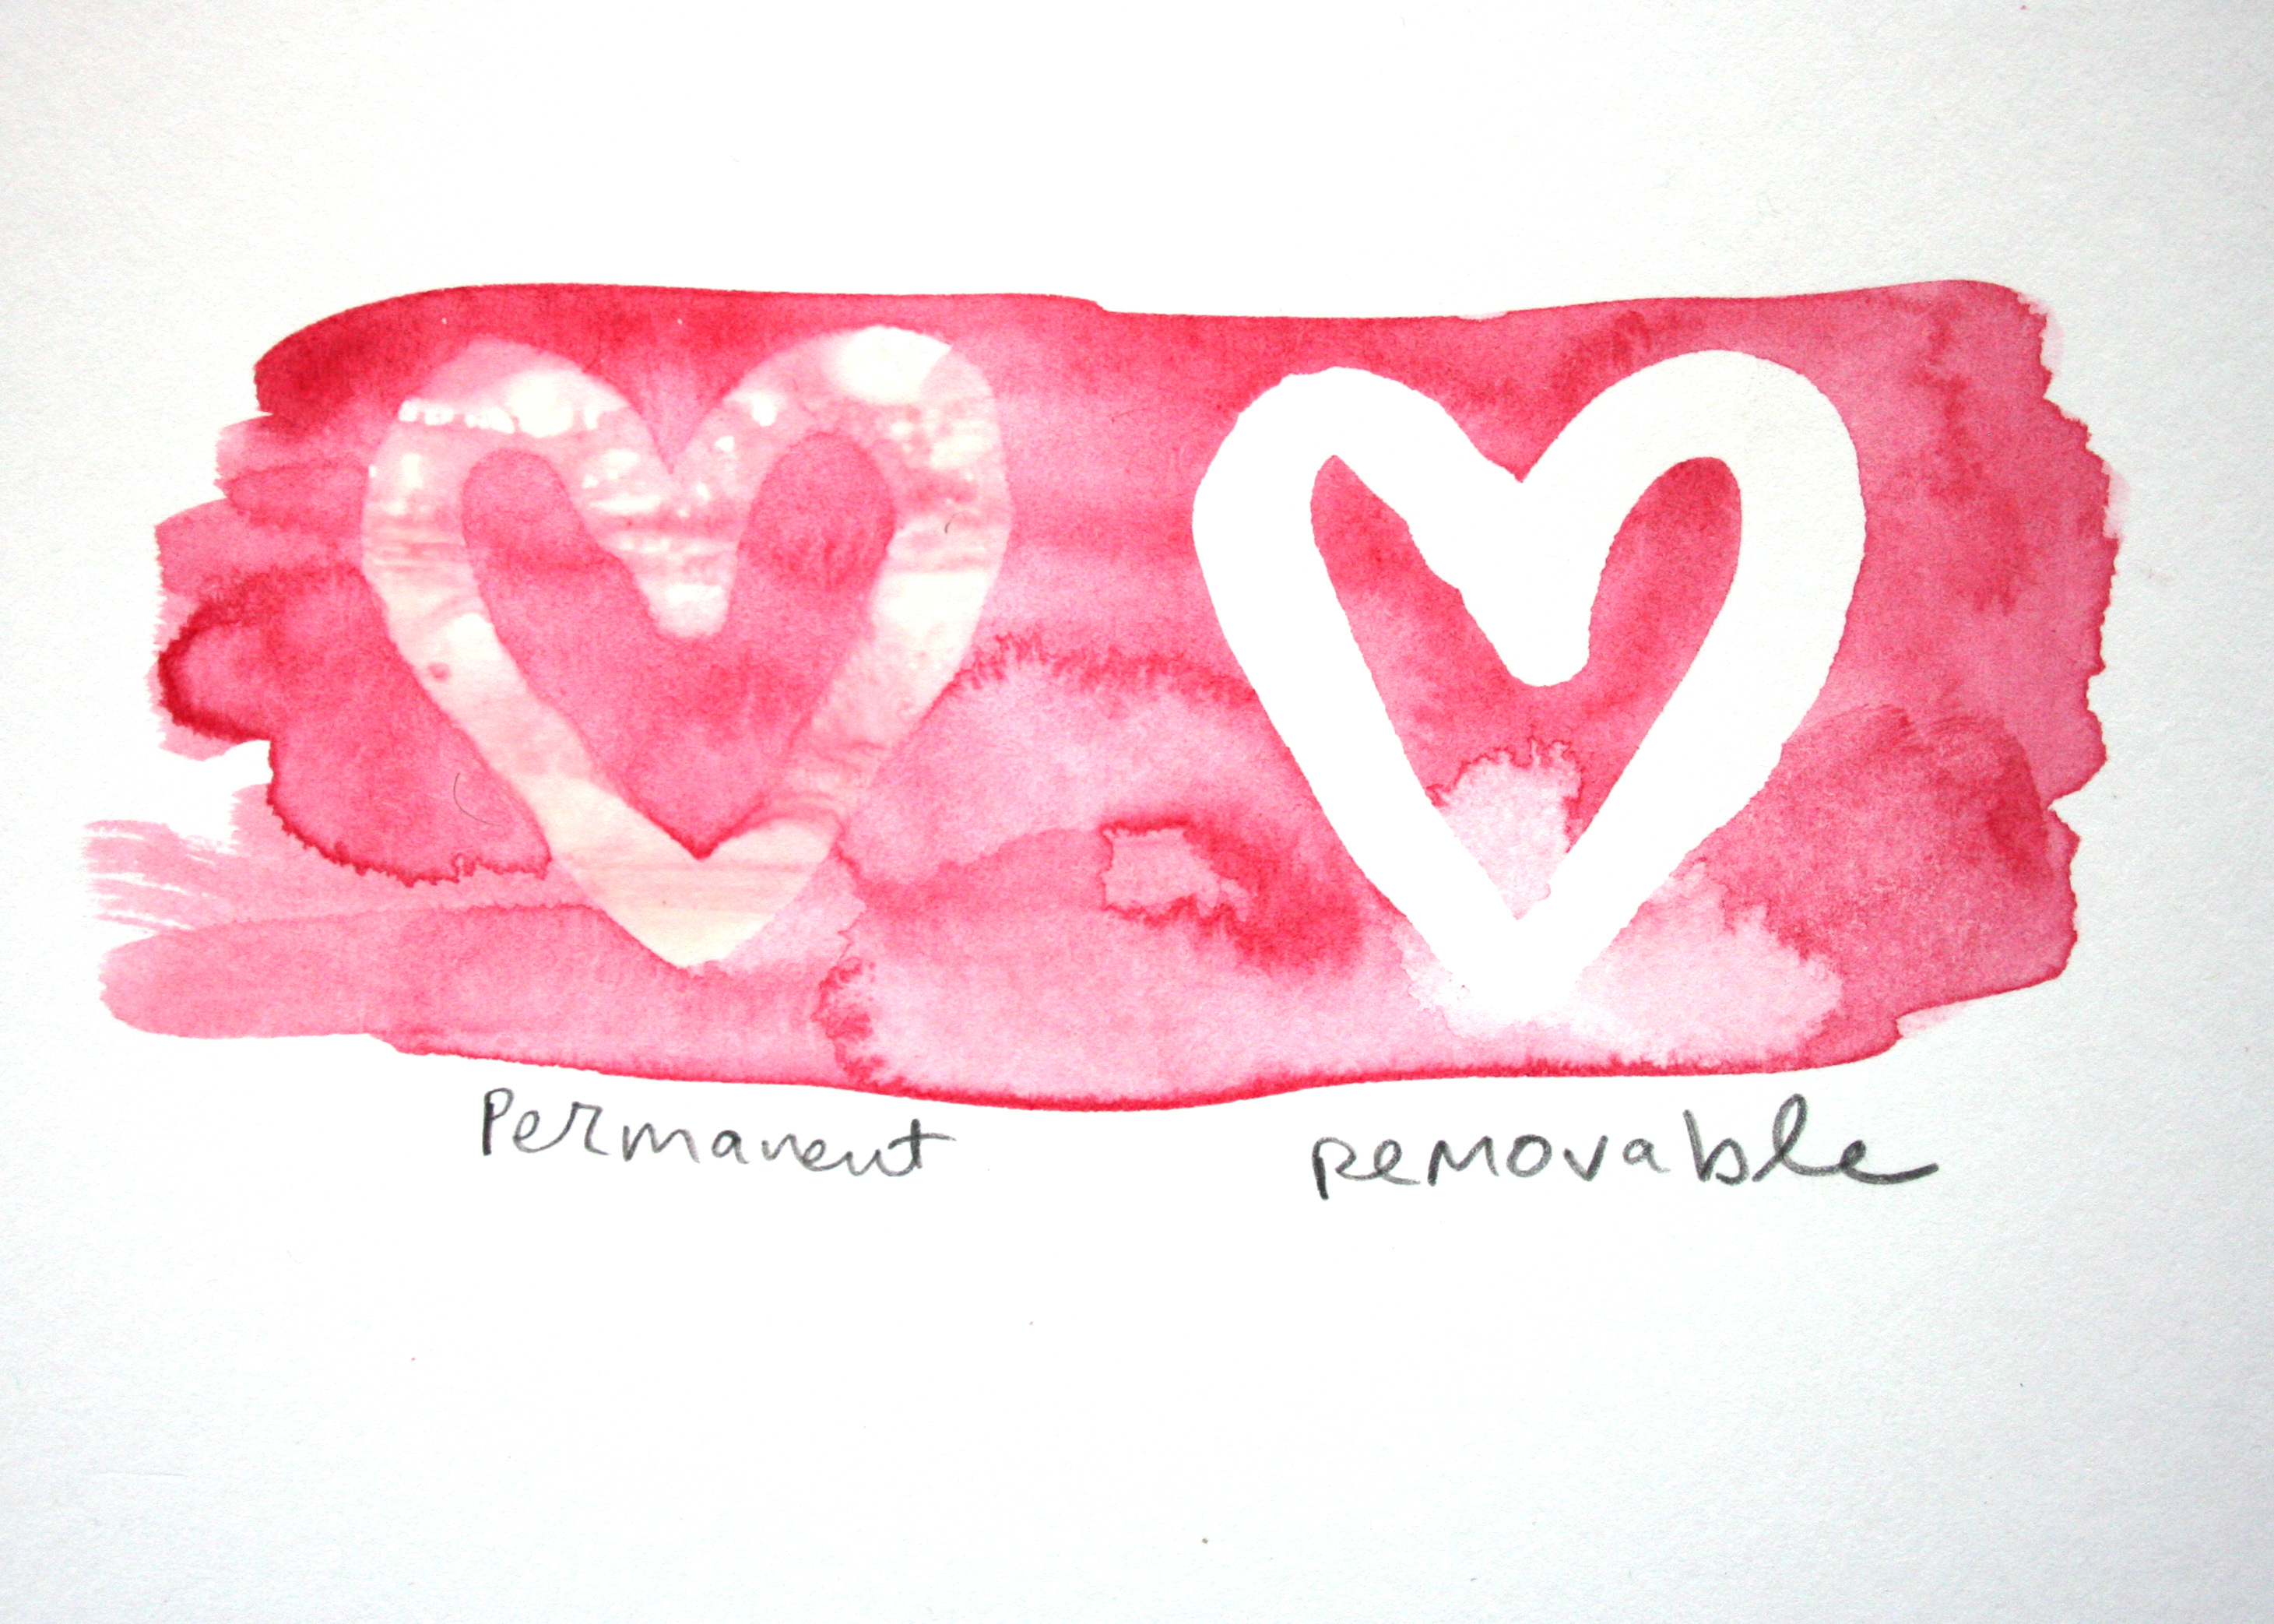 Permanent versus removable